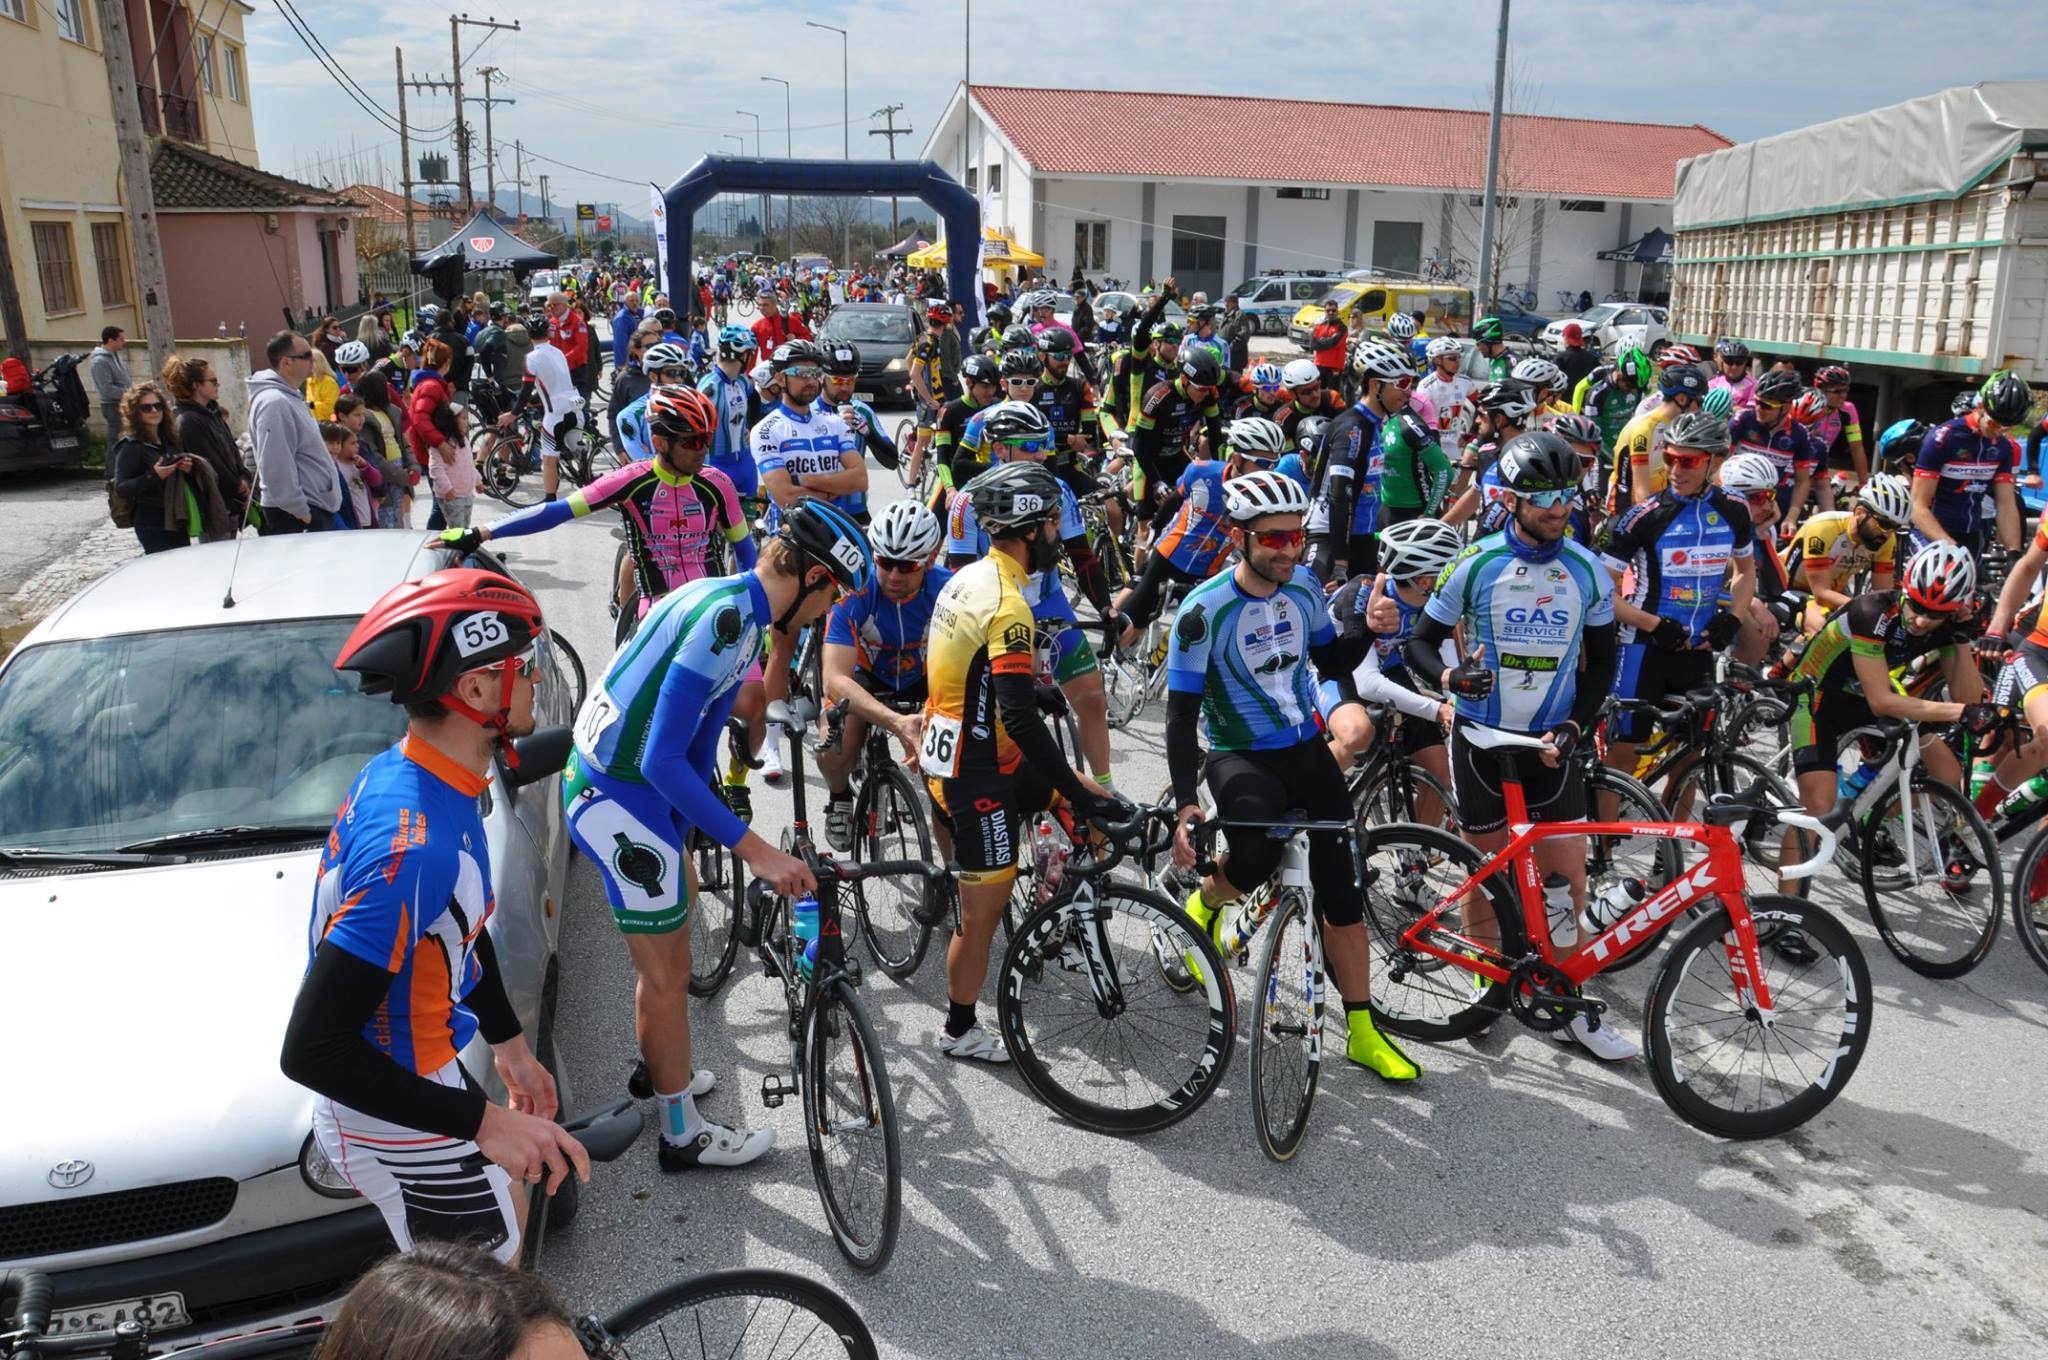 Mεγάλος συναγωνισμός από 600 αθλητές στον Ποδηλατικό Γύρο Λάρισας 